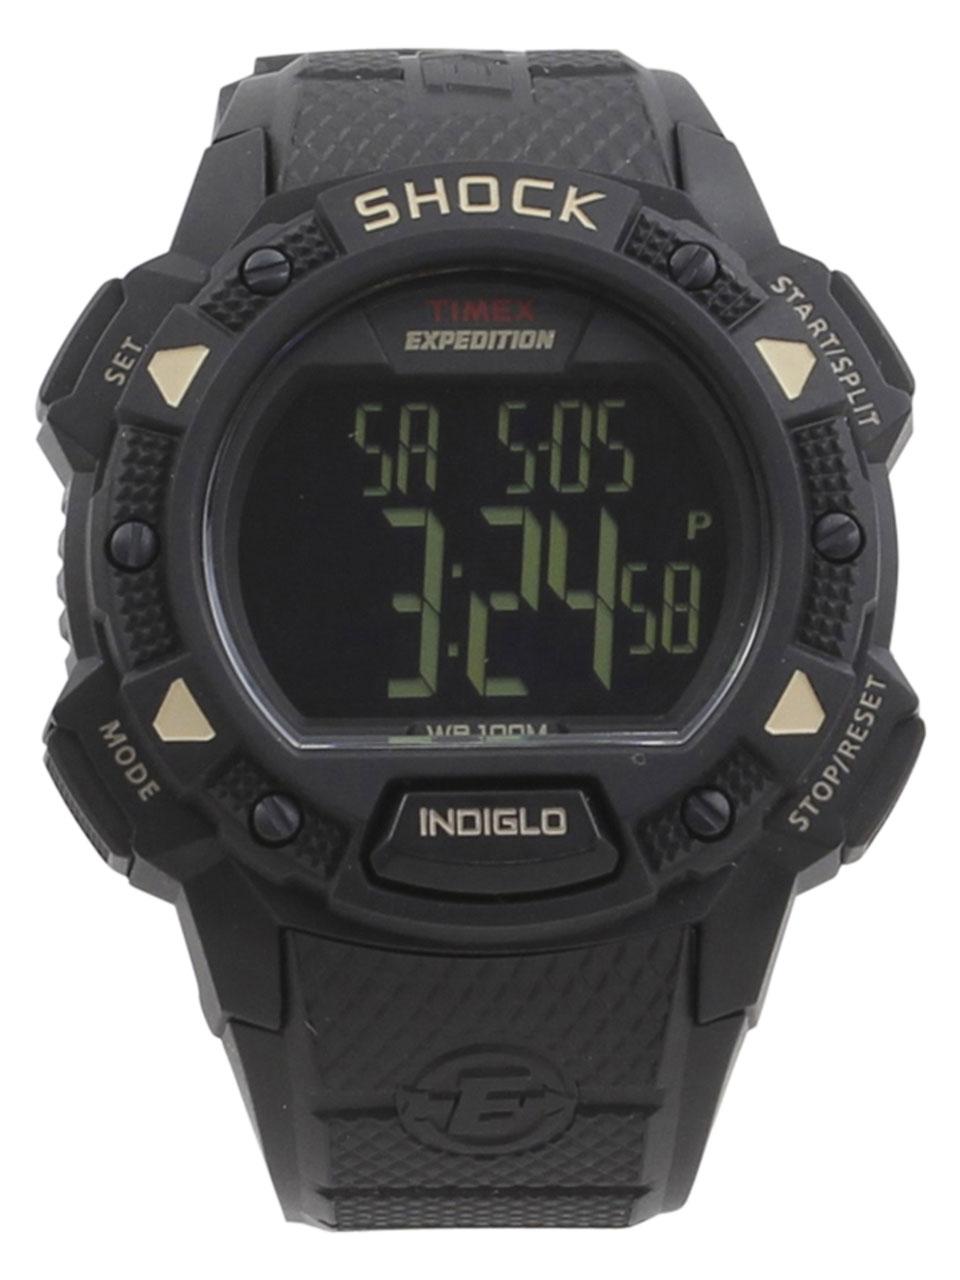 Timex Men S T49896 Expedition Shock Black Digital Watch